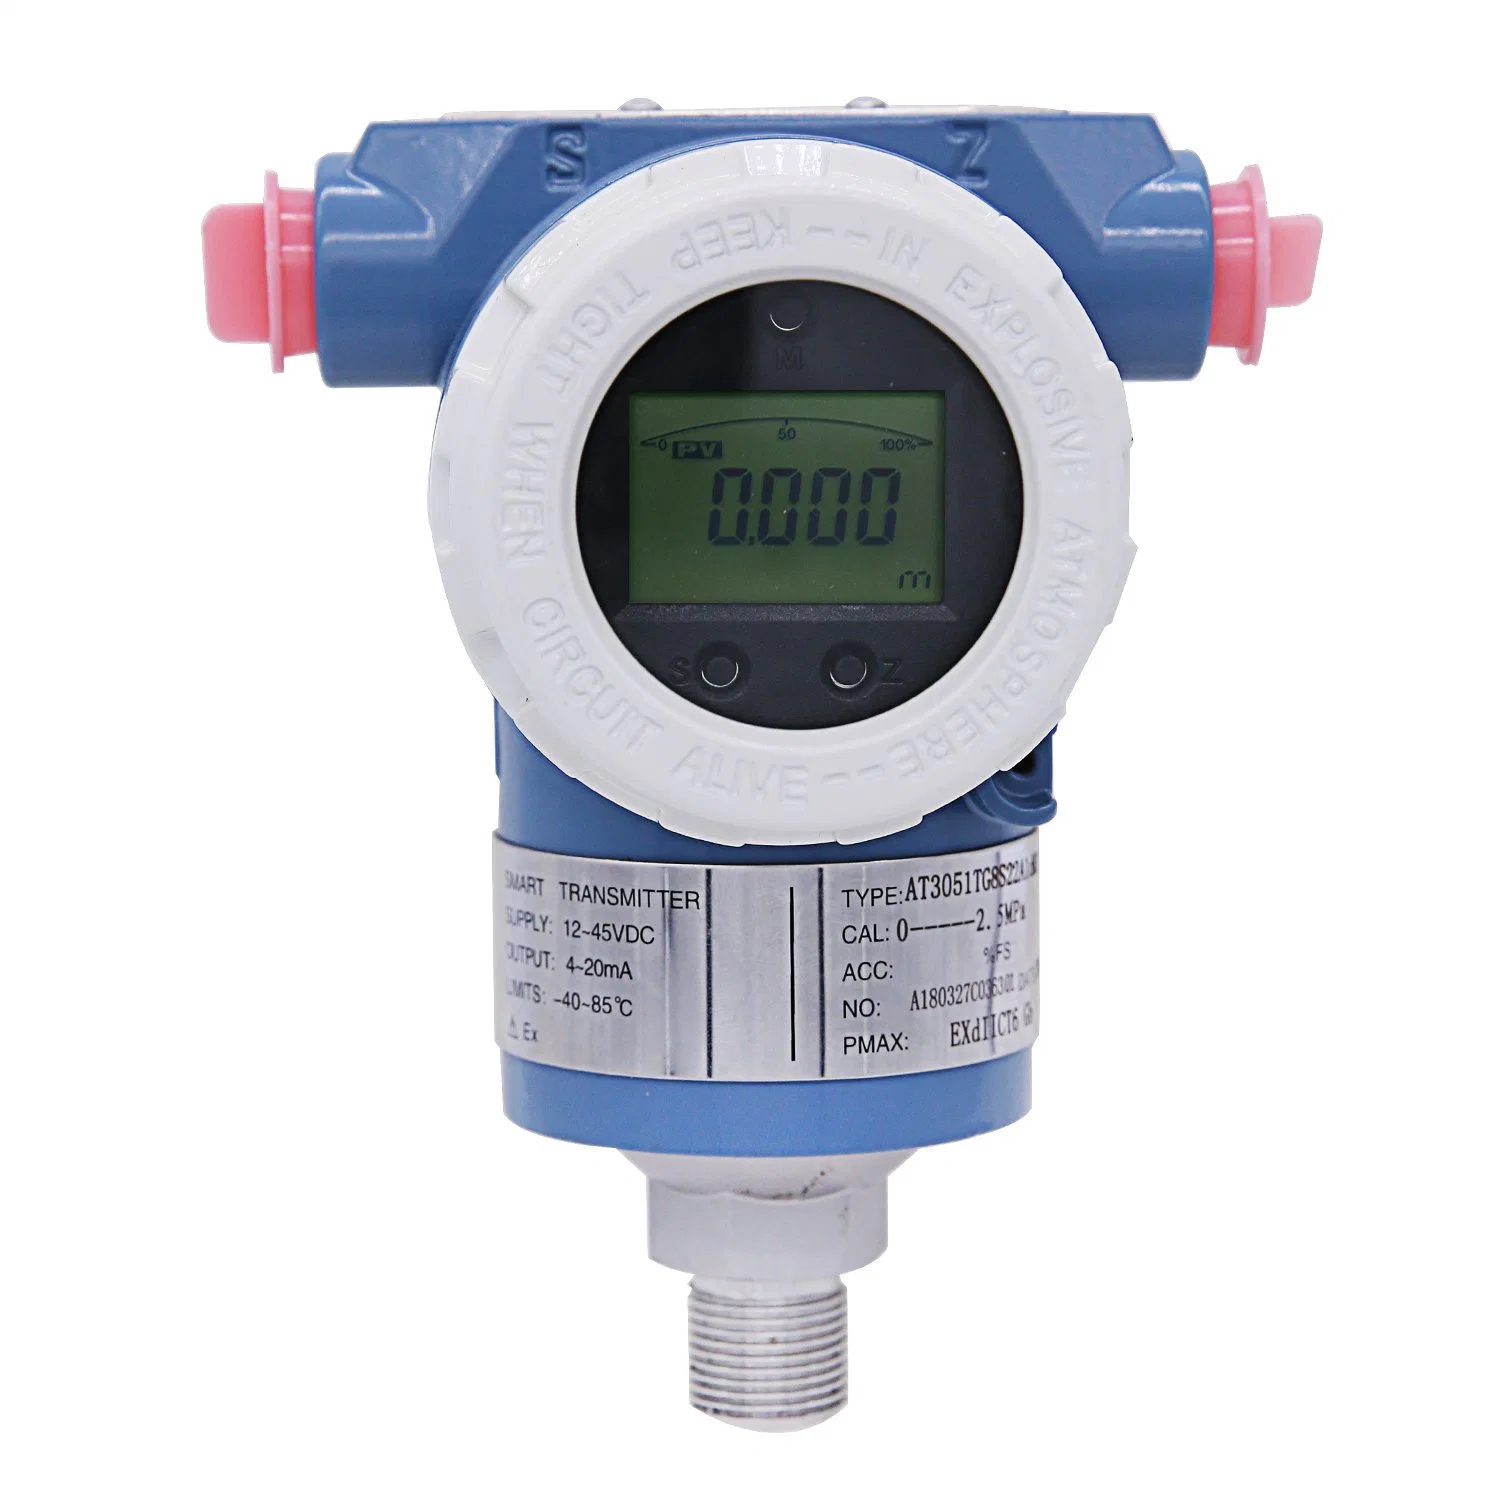 Low Price Gauge Absolute Pressure Transmitter 4-20mA Hart At3051tg Pressure Transmitter Gas Steam Oil Water